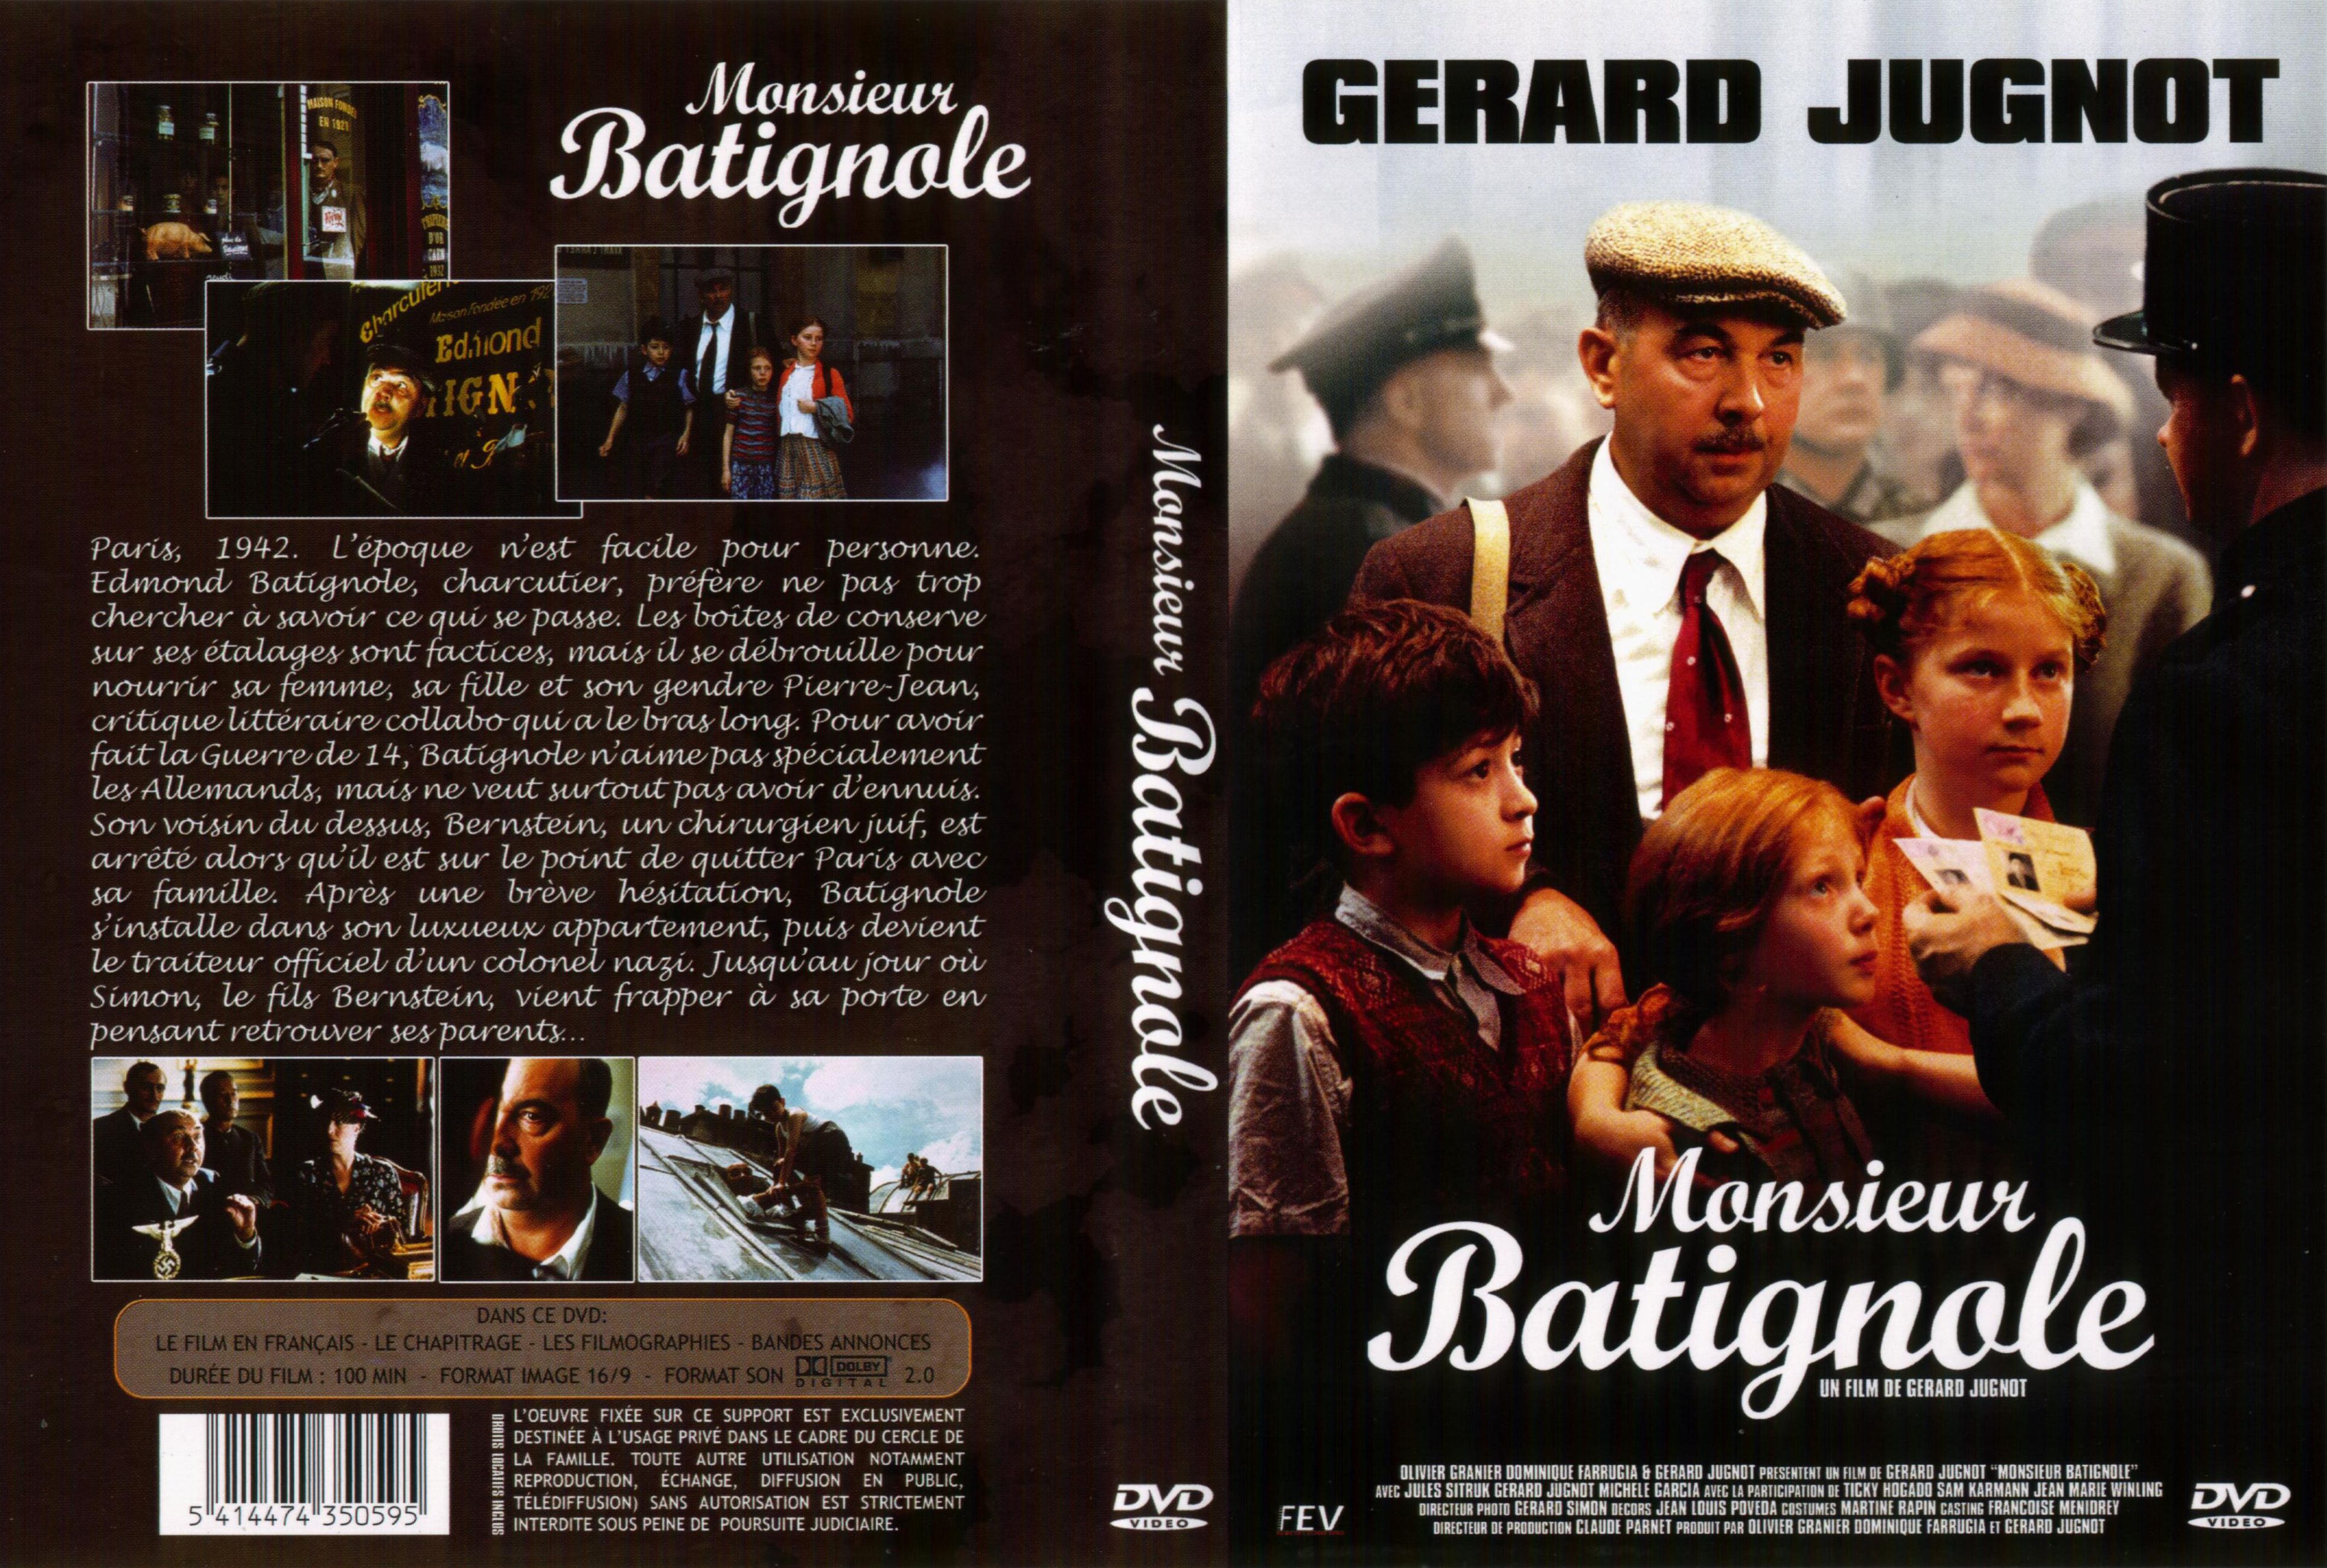 Jaquette DVD Monsieur Batignole v2